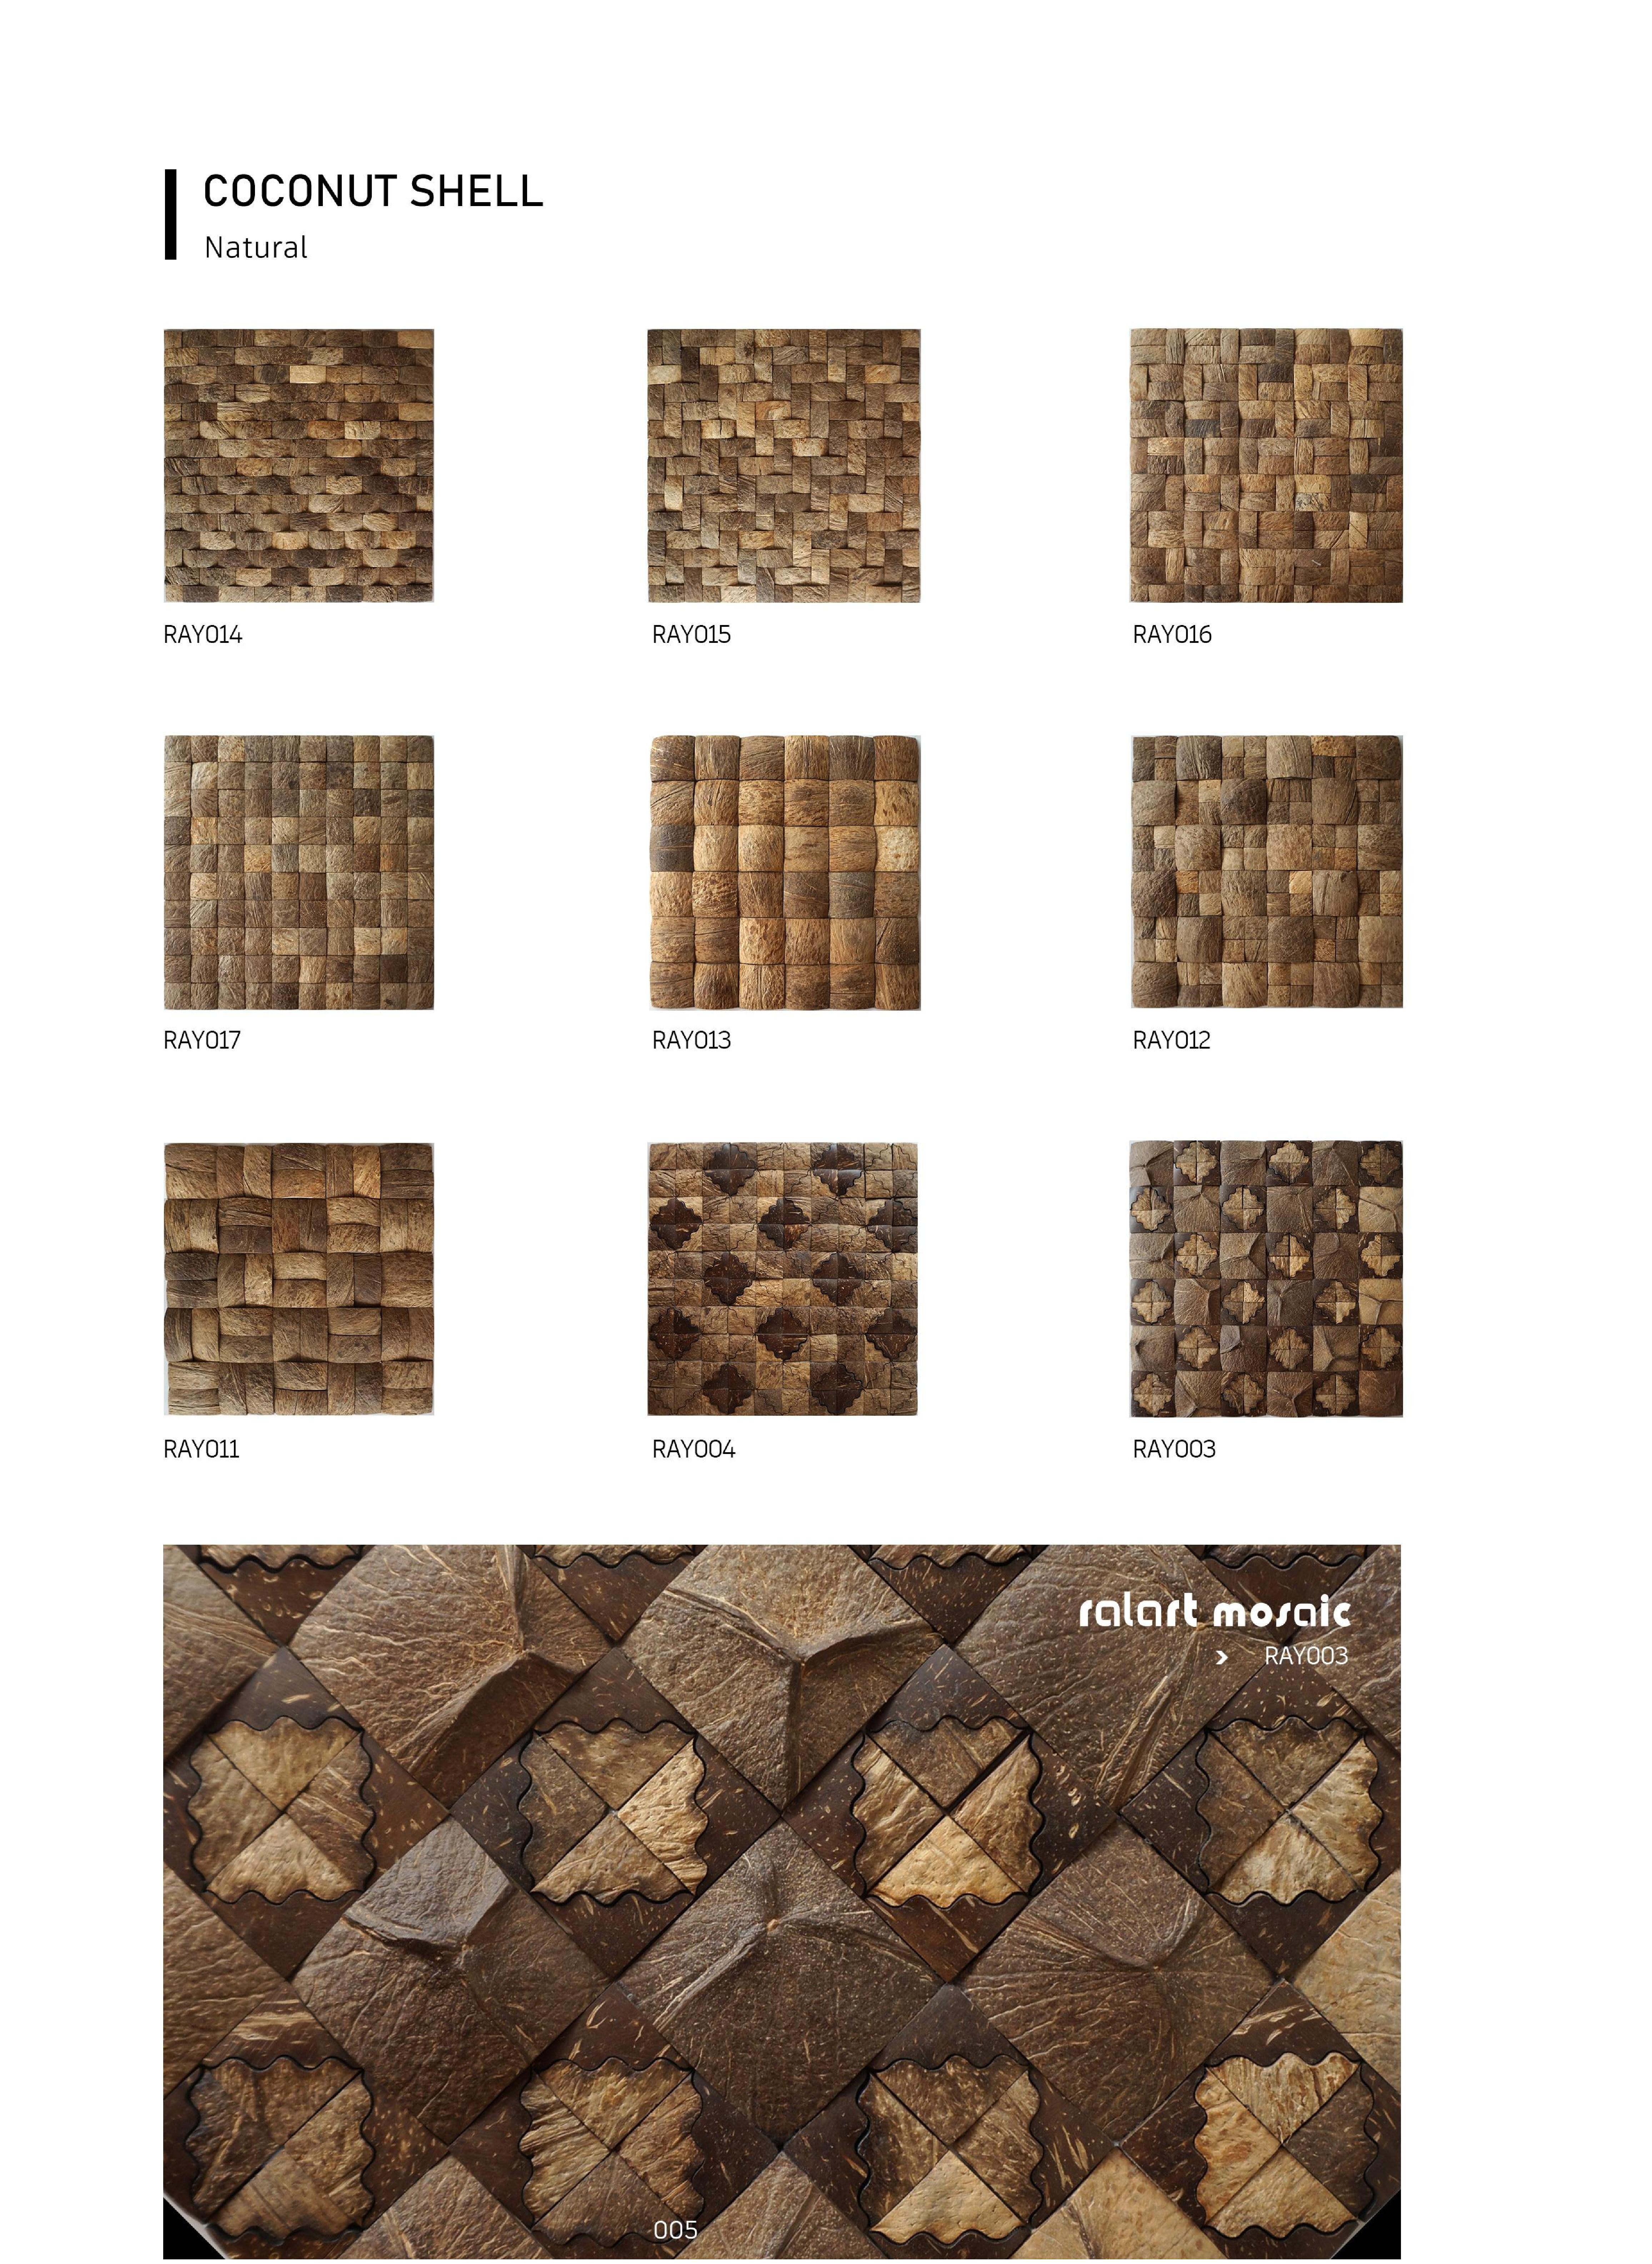 Coconut shell mosaic - Ralart Mosaic_6.jpg